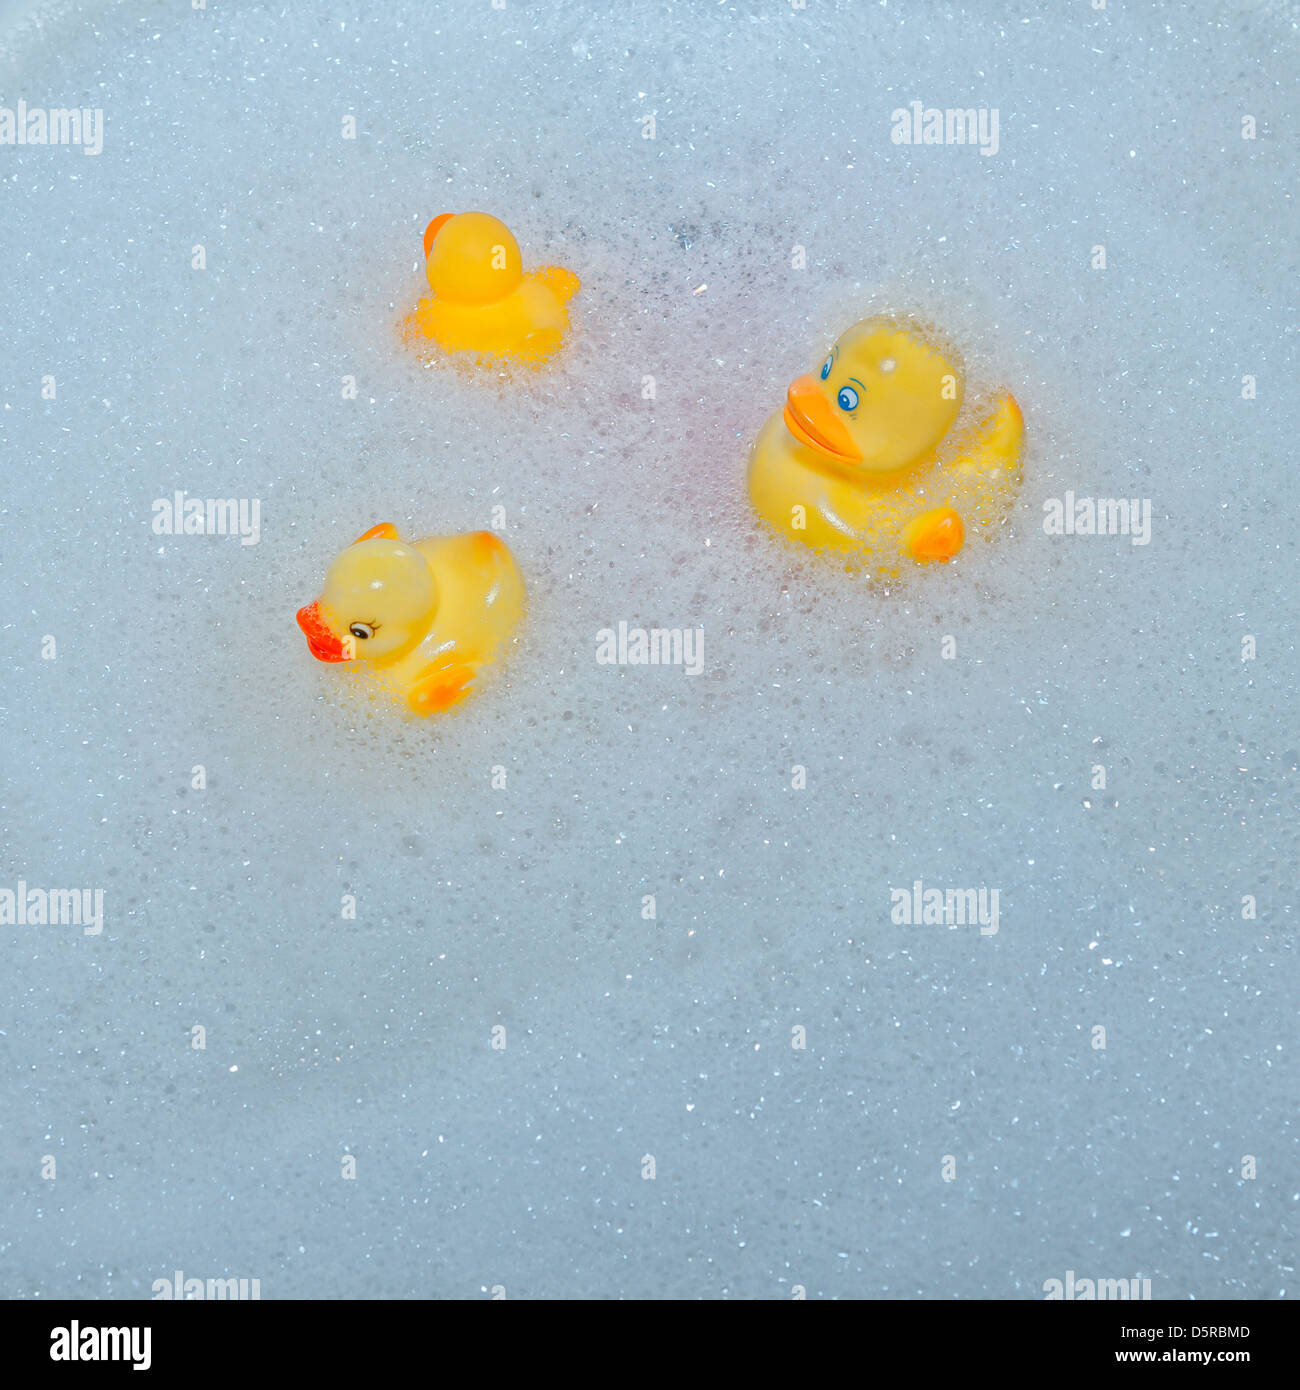 three rubber ducks swimming in foam Stock Photo